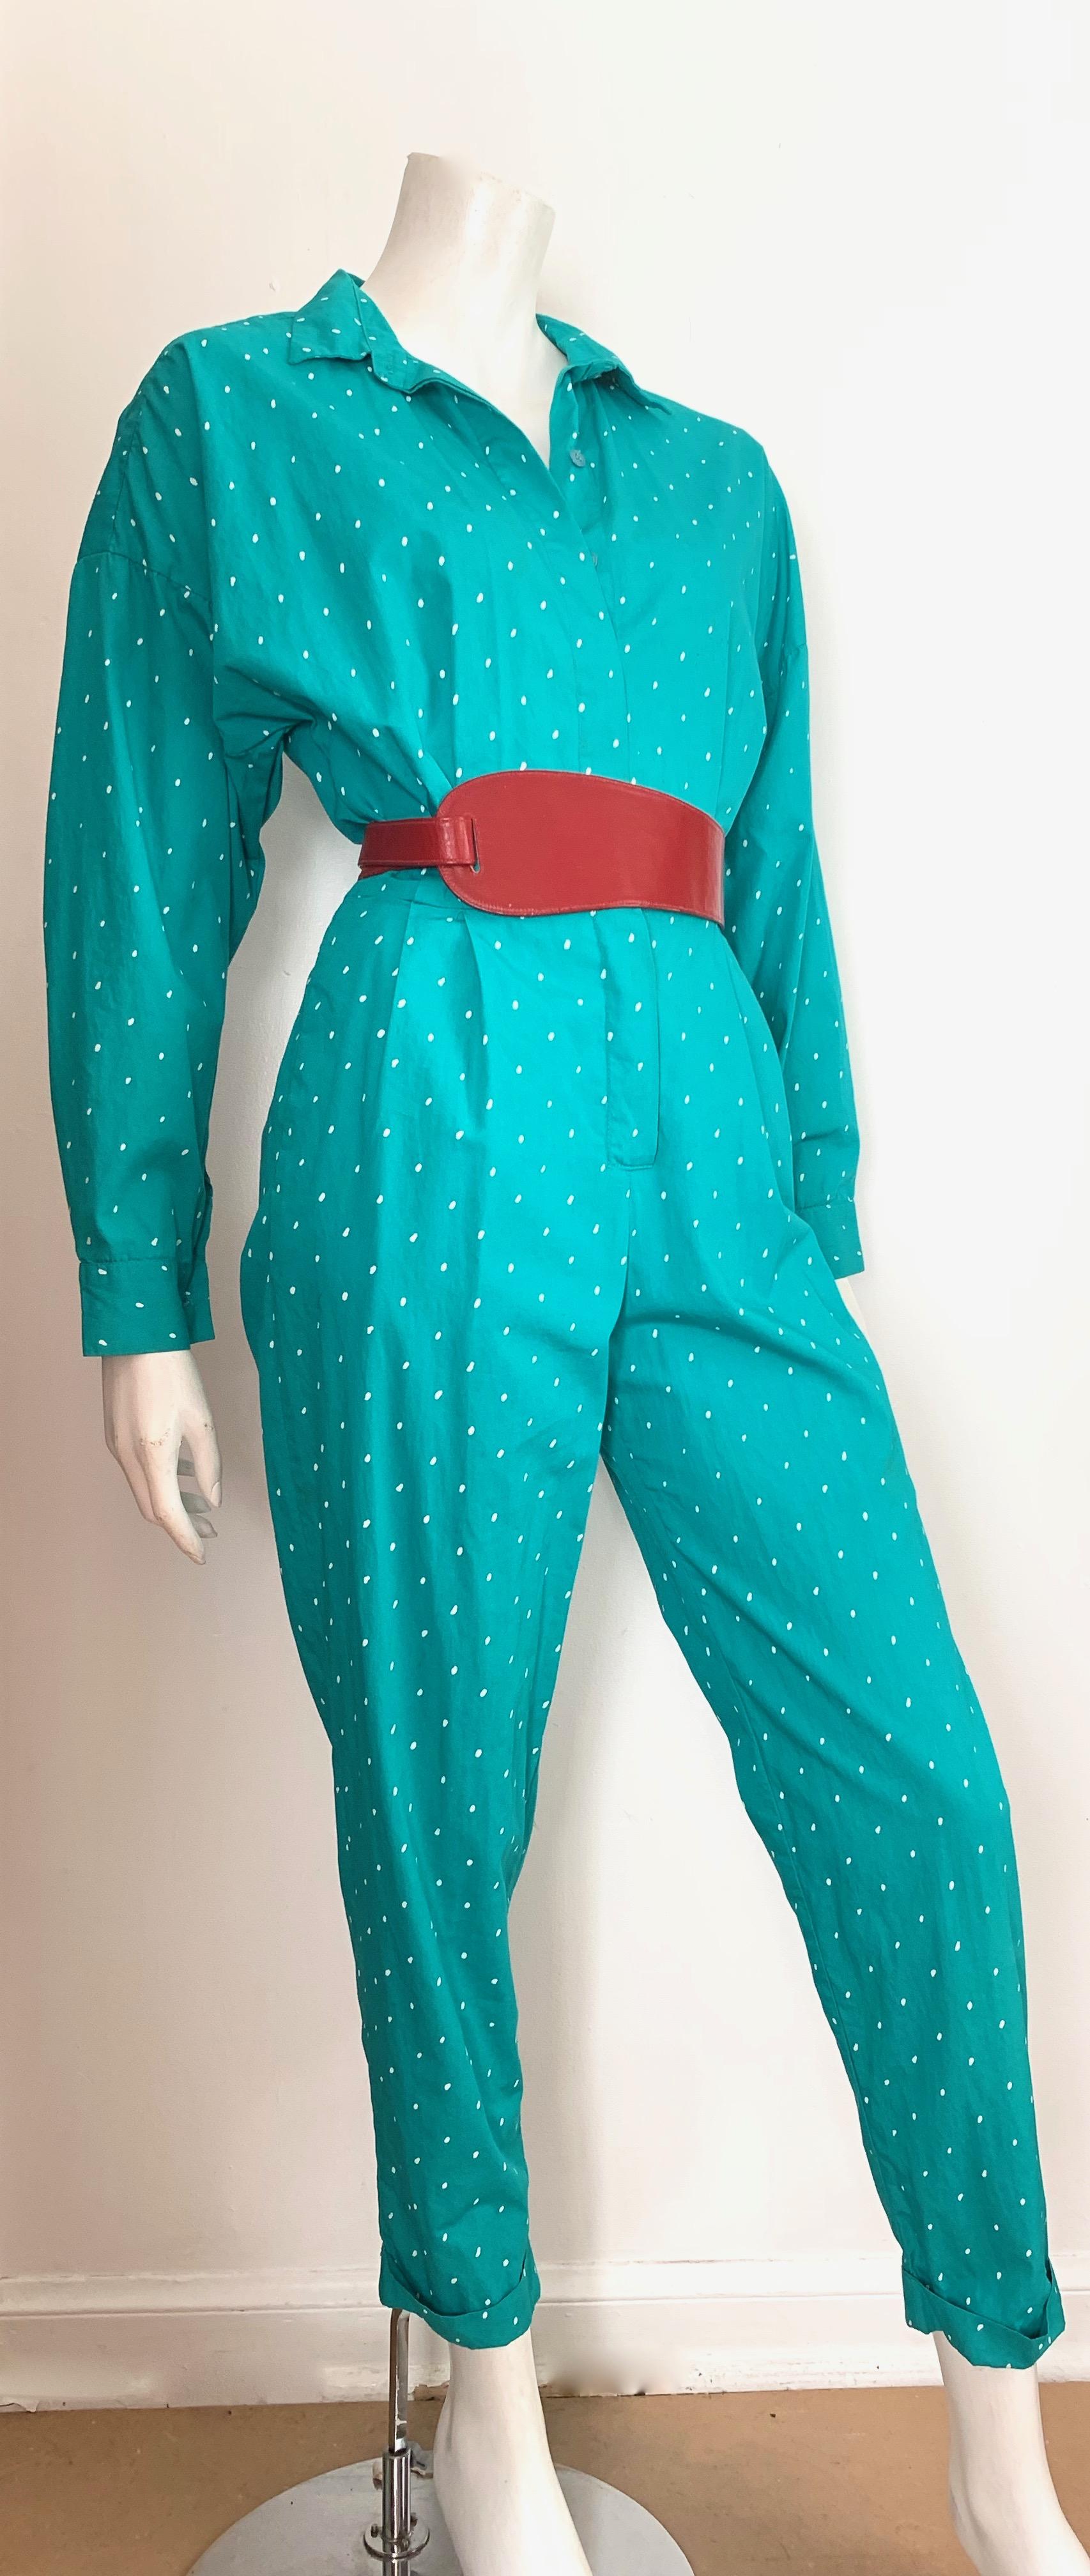 Saint Germain 1980s Cotton Polka Dot Jumpsuit with Pockets Size 4.  10